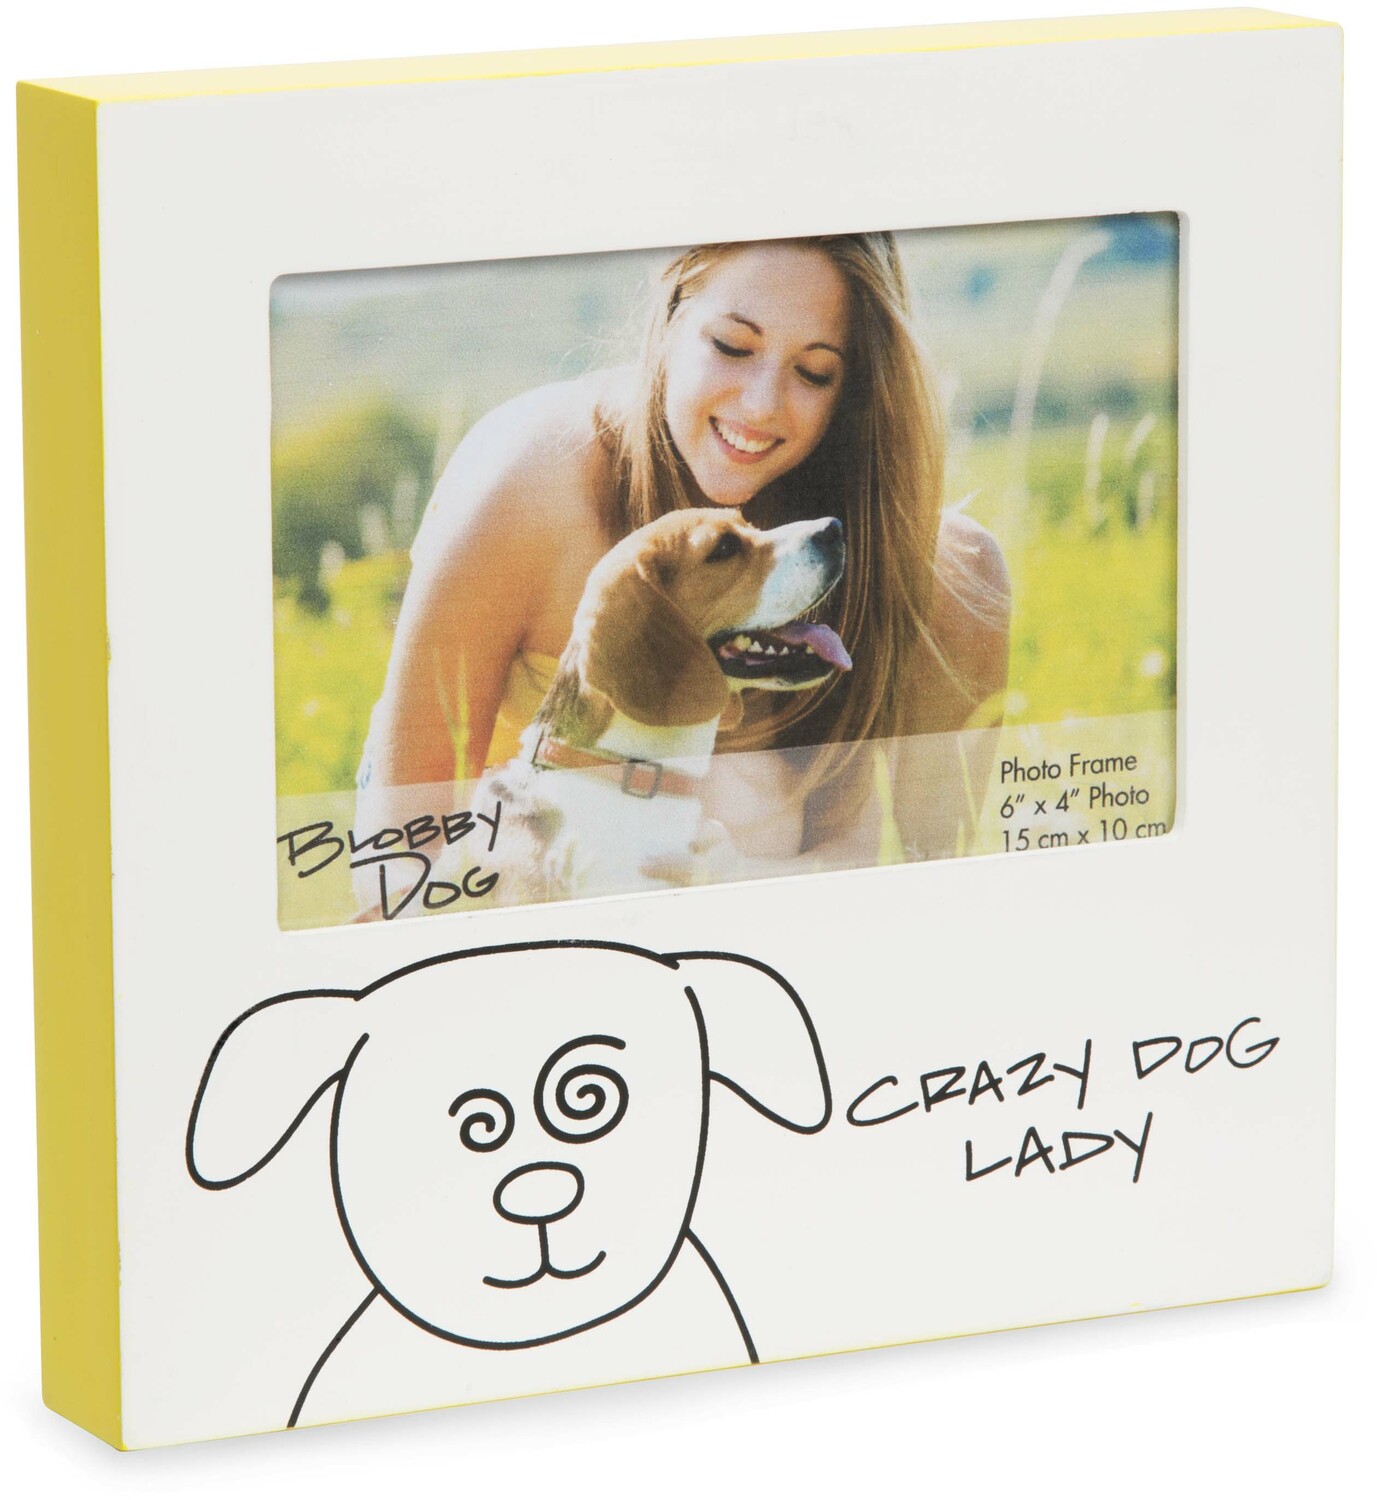 Crazy Dog Lady by Blobby Dog - Crazy Dog Lady - 7" Frame
(Holds 6" x 4" Photo)